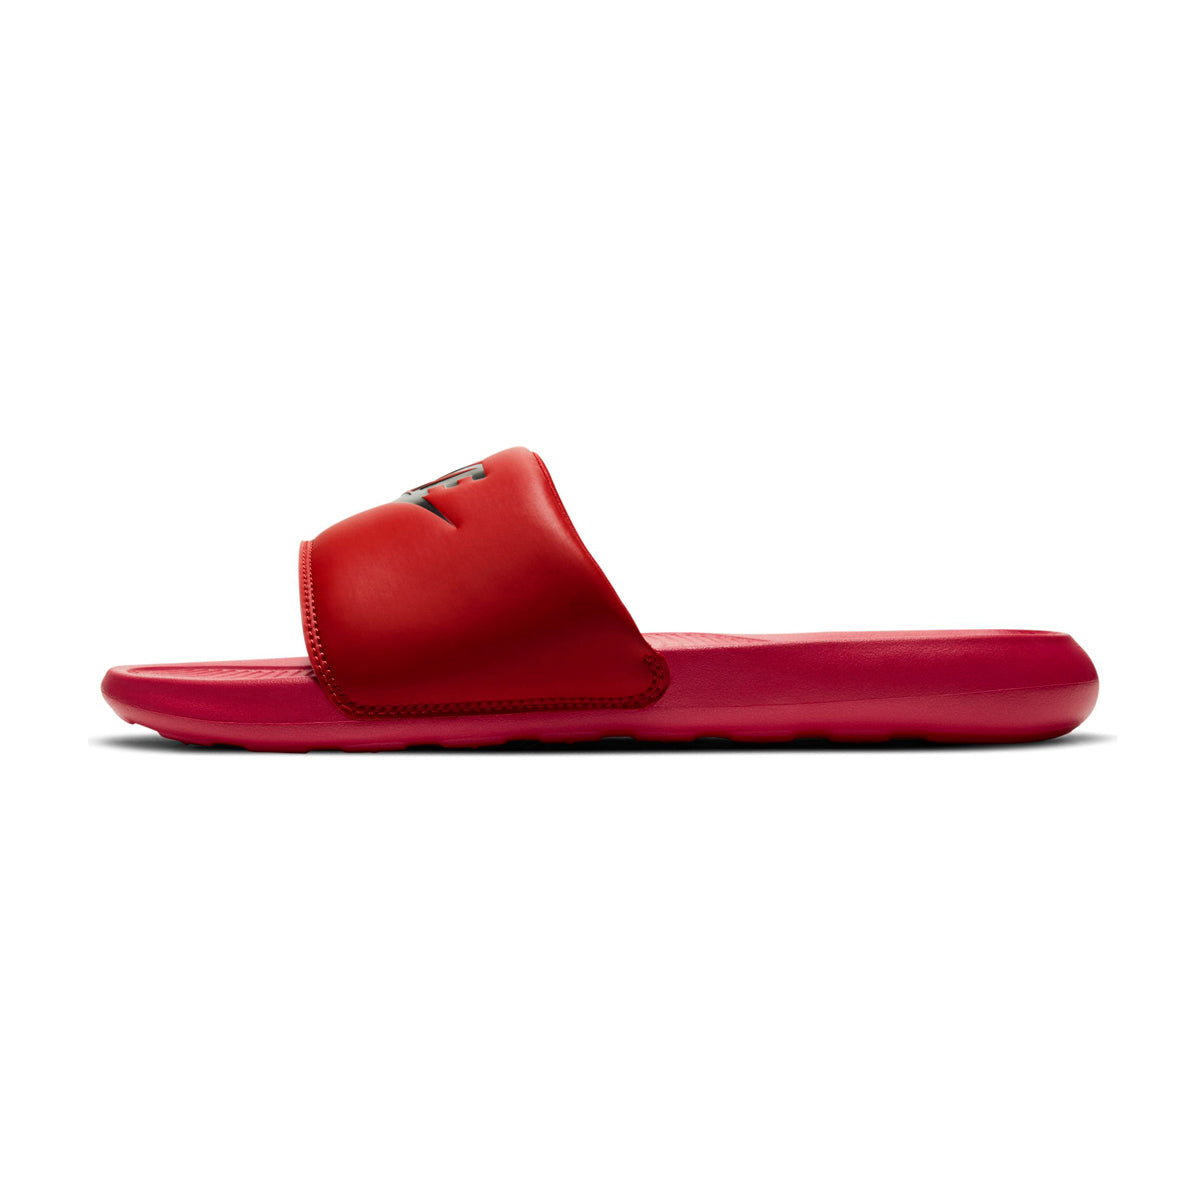 high heel nike red bandana shoes Men's Sandals